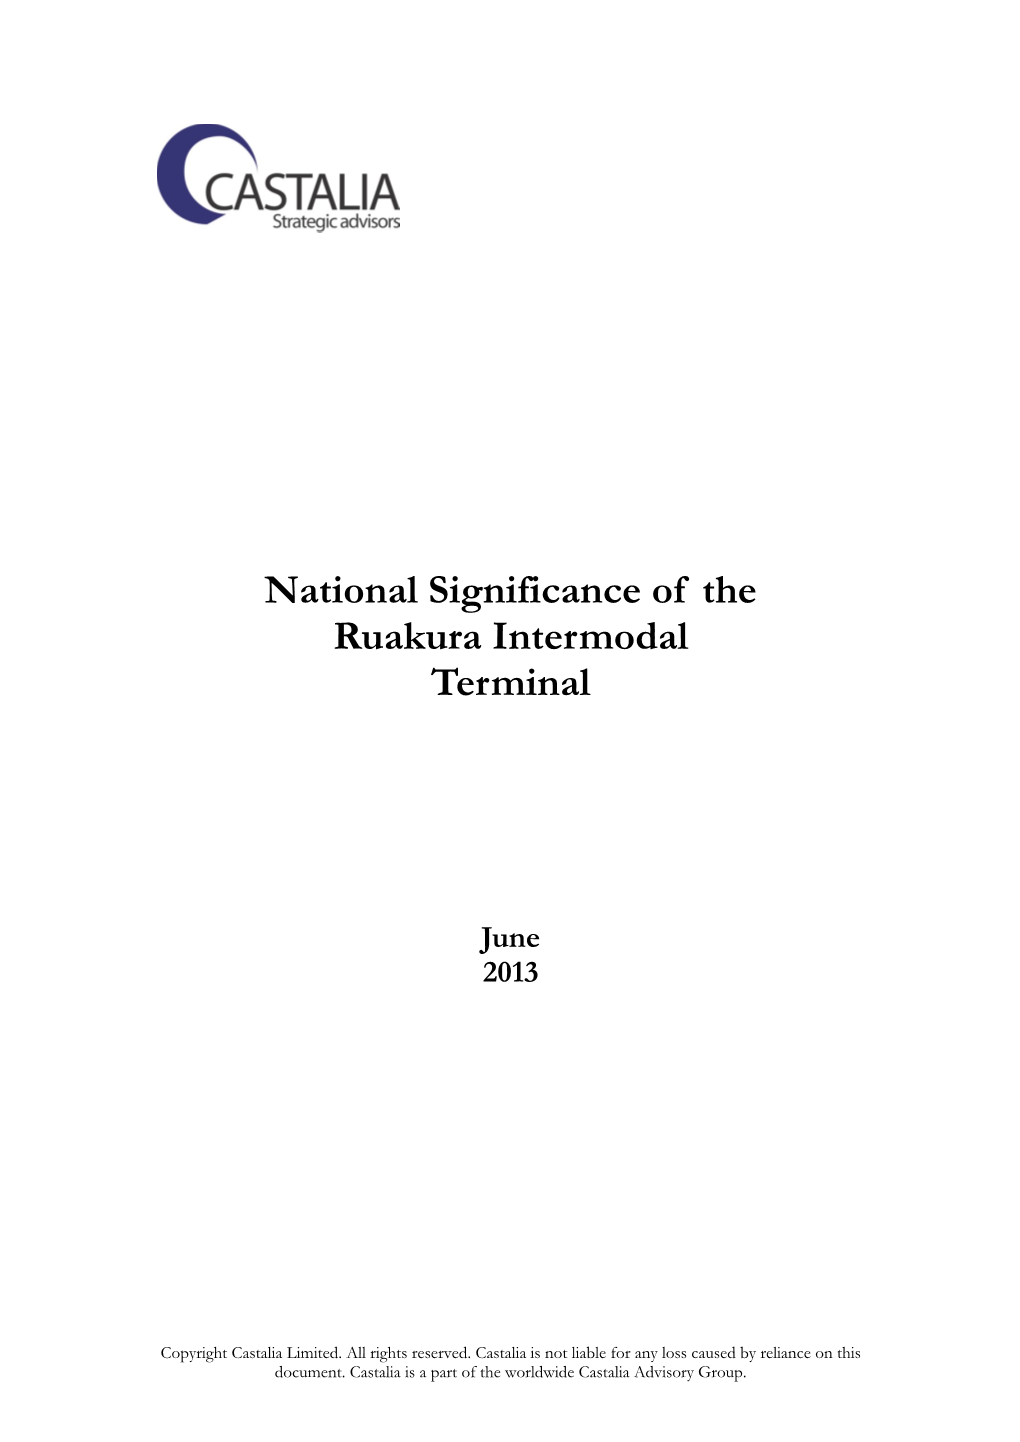 National Significance of the Ruakura Intermodal Terminal